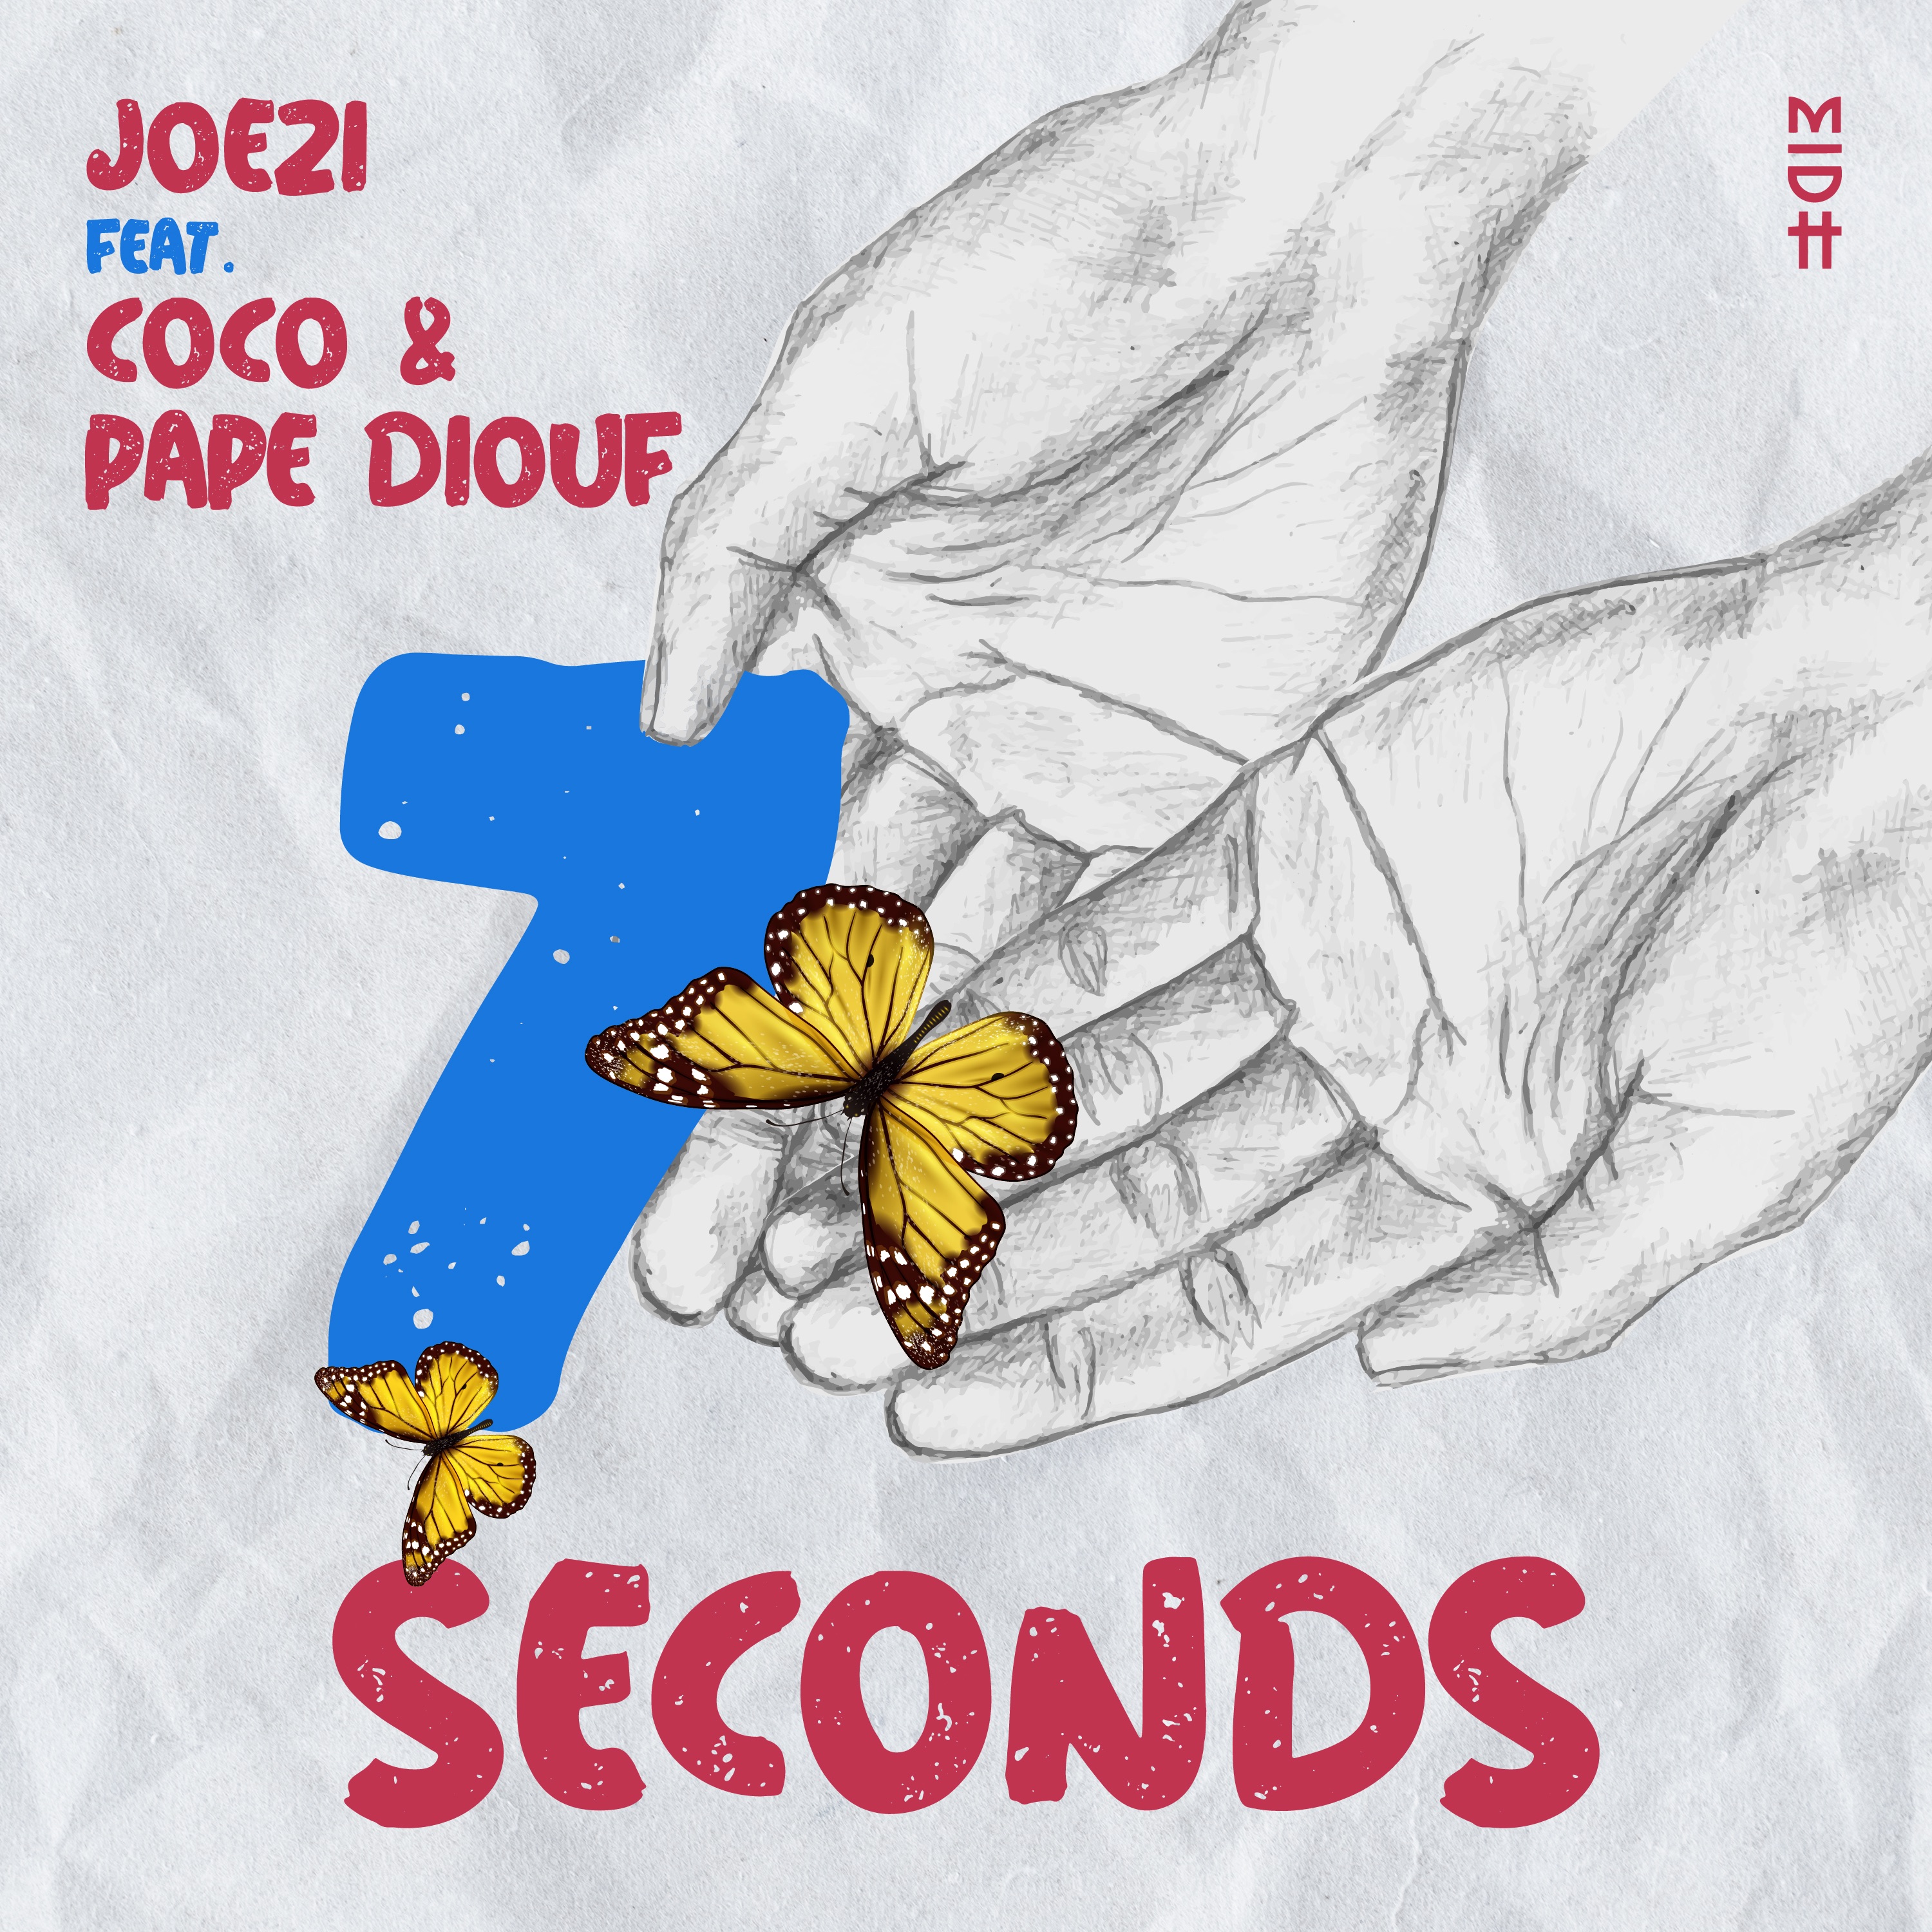 7 seconds coco pape. Joezi Coco. 7 Seconds feat. Coco Pape Diouf. 7 Seconds (feat. Coco & Pape Diouf) [Mixed] от joezi. Joezi & Lizwi исполнитель.